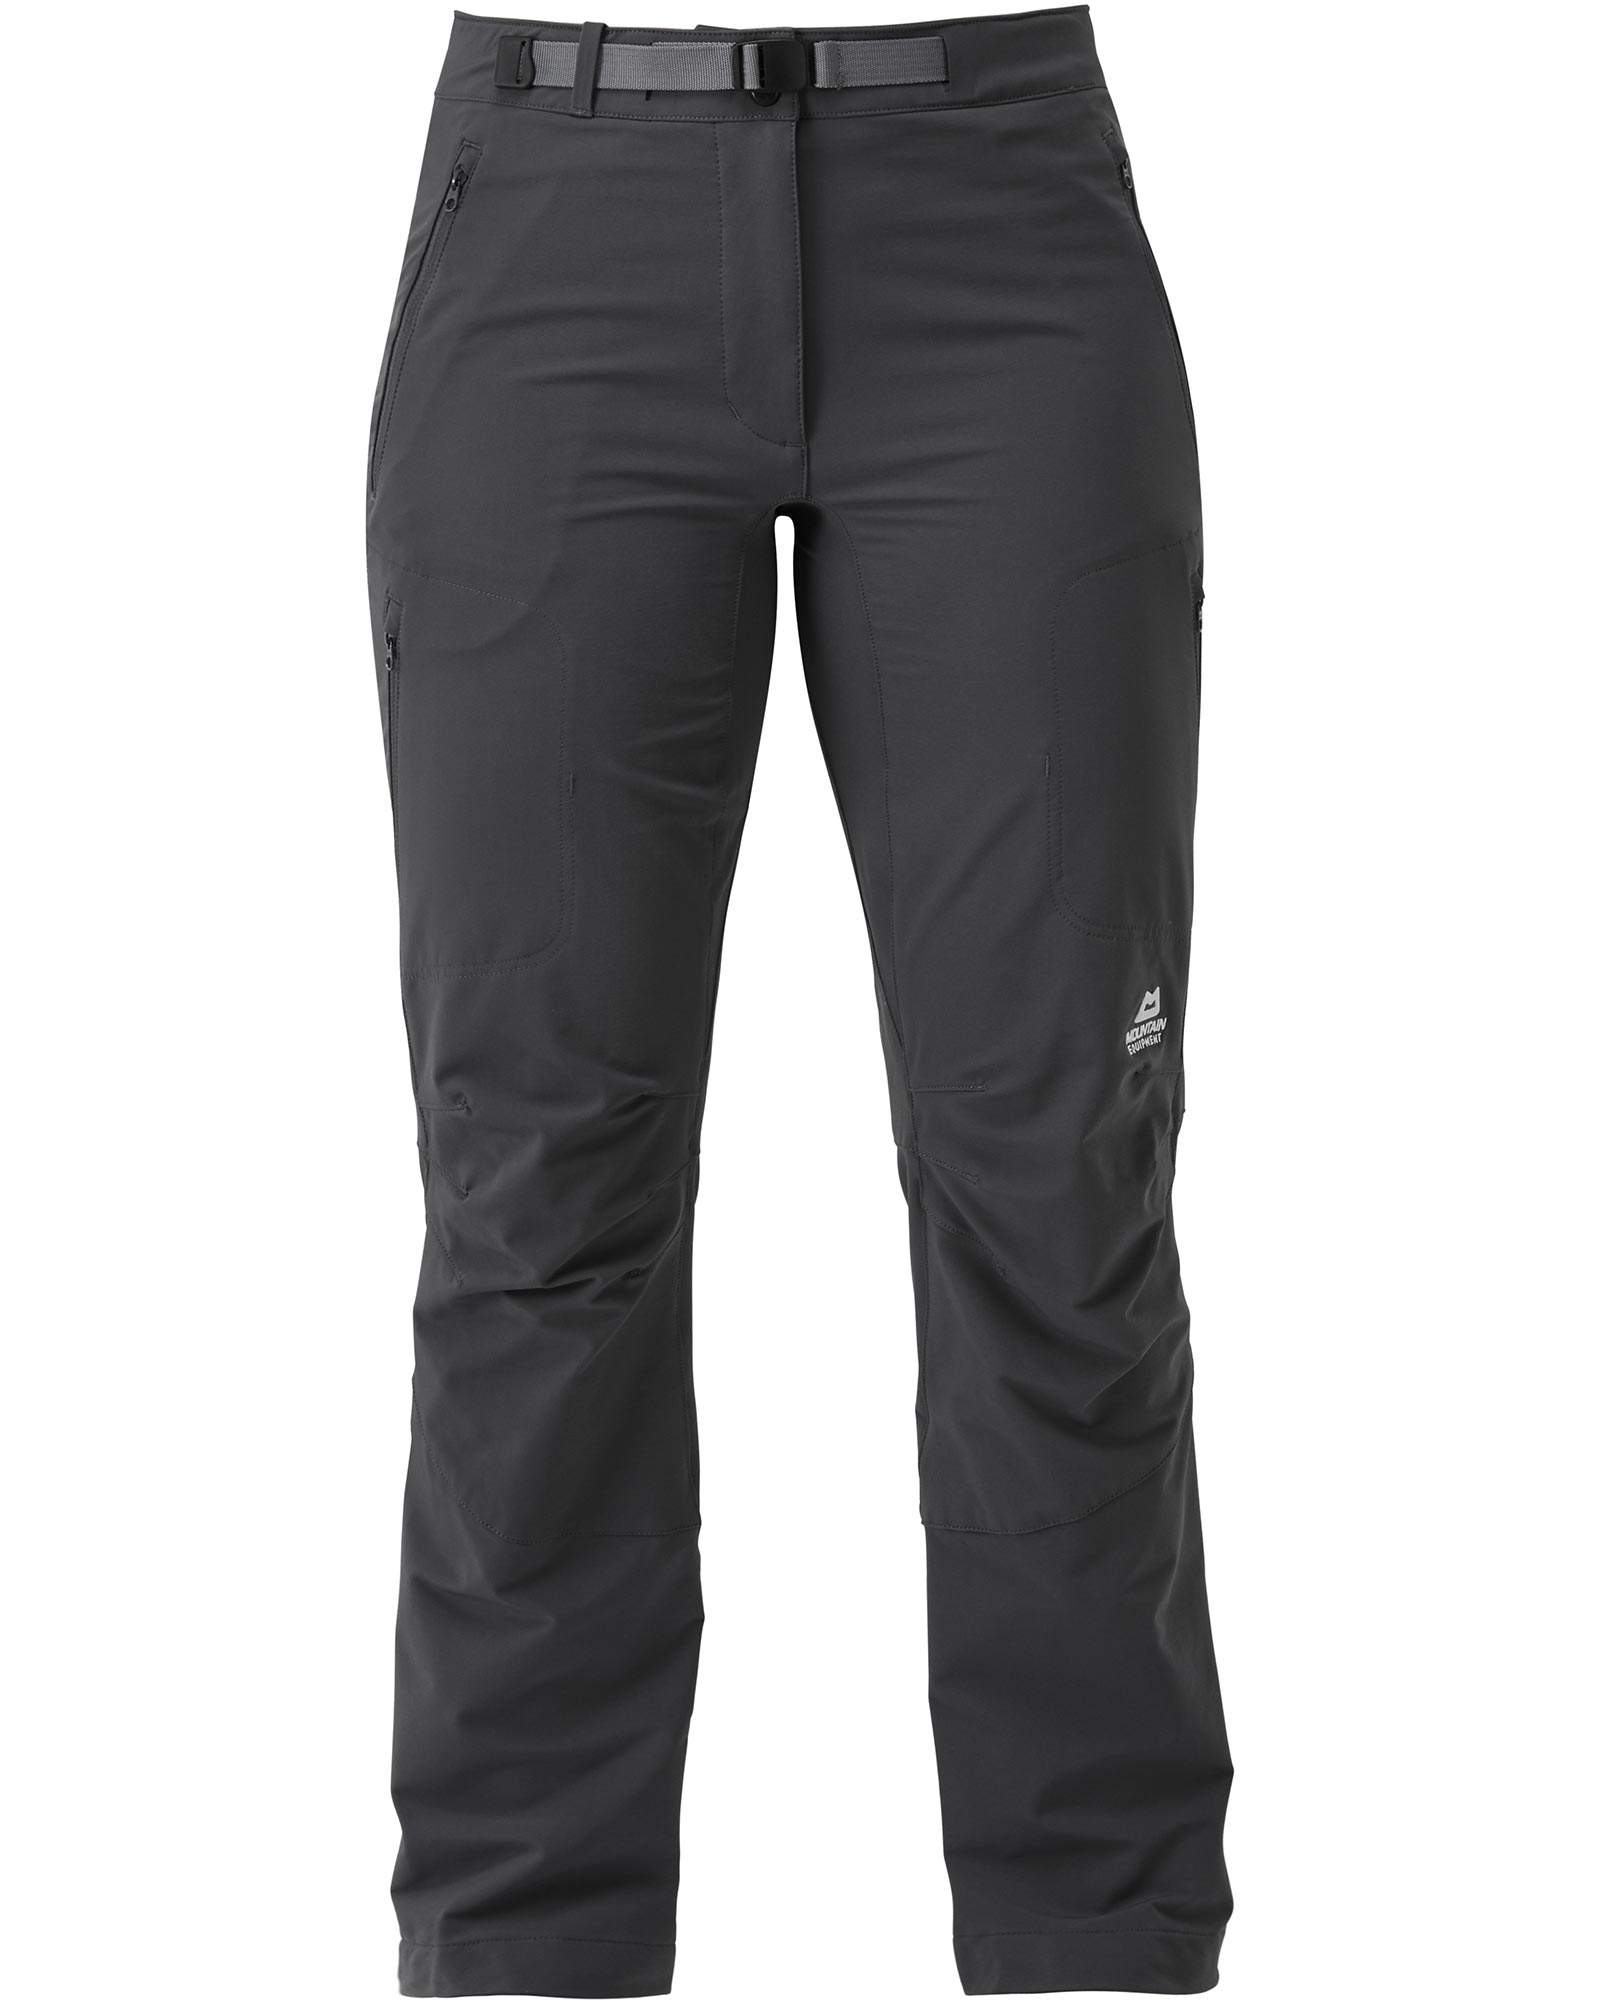 Mountain Equipment Chamois Women’s Pants   Short Leg - Anvil Grey 12